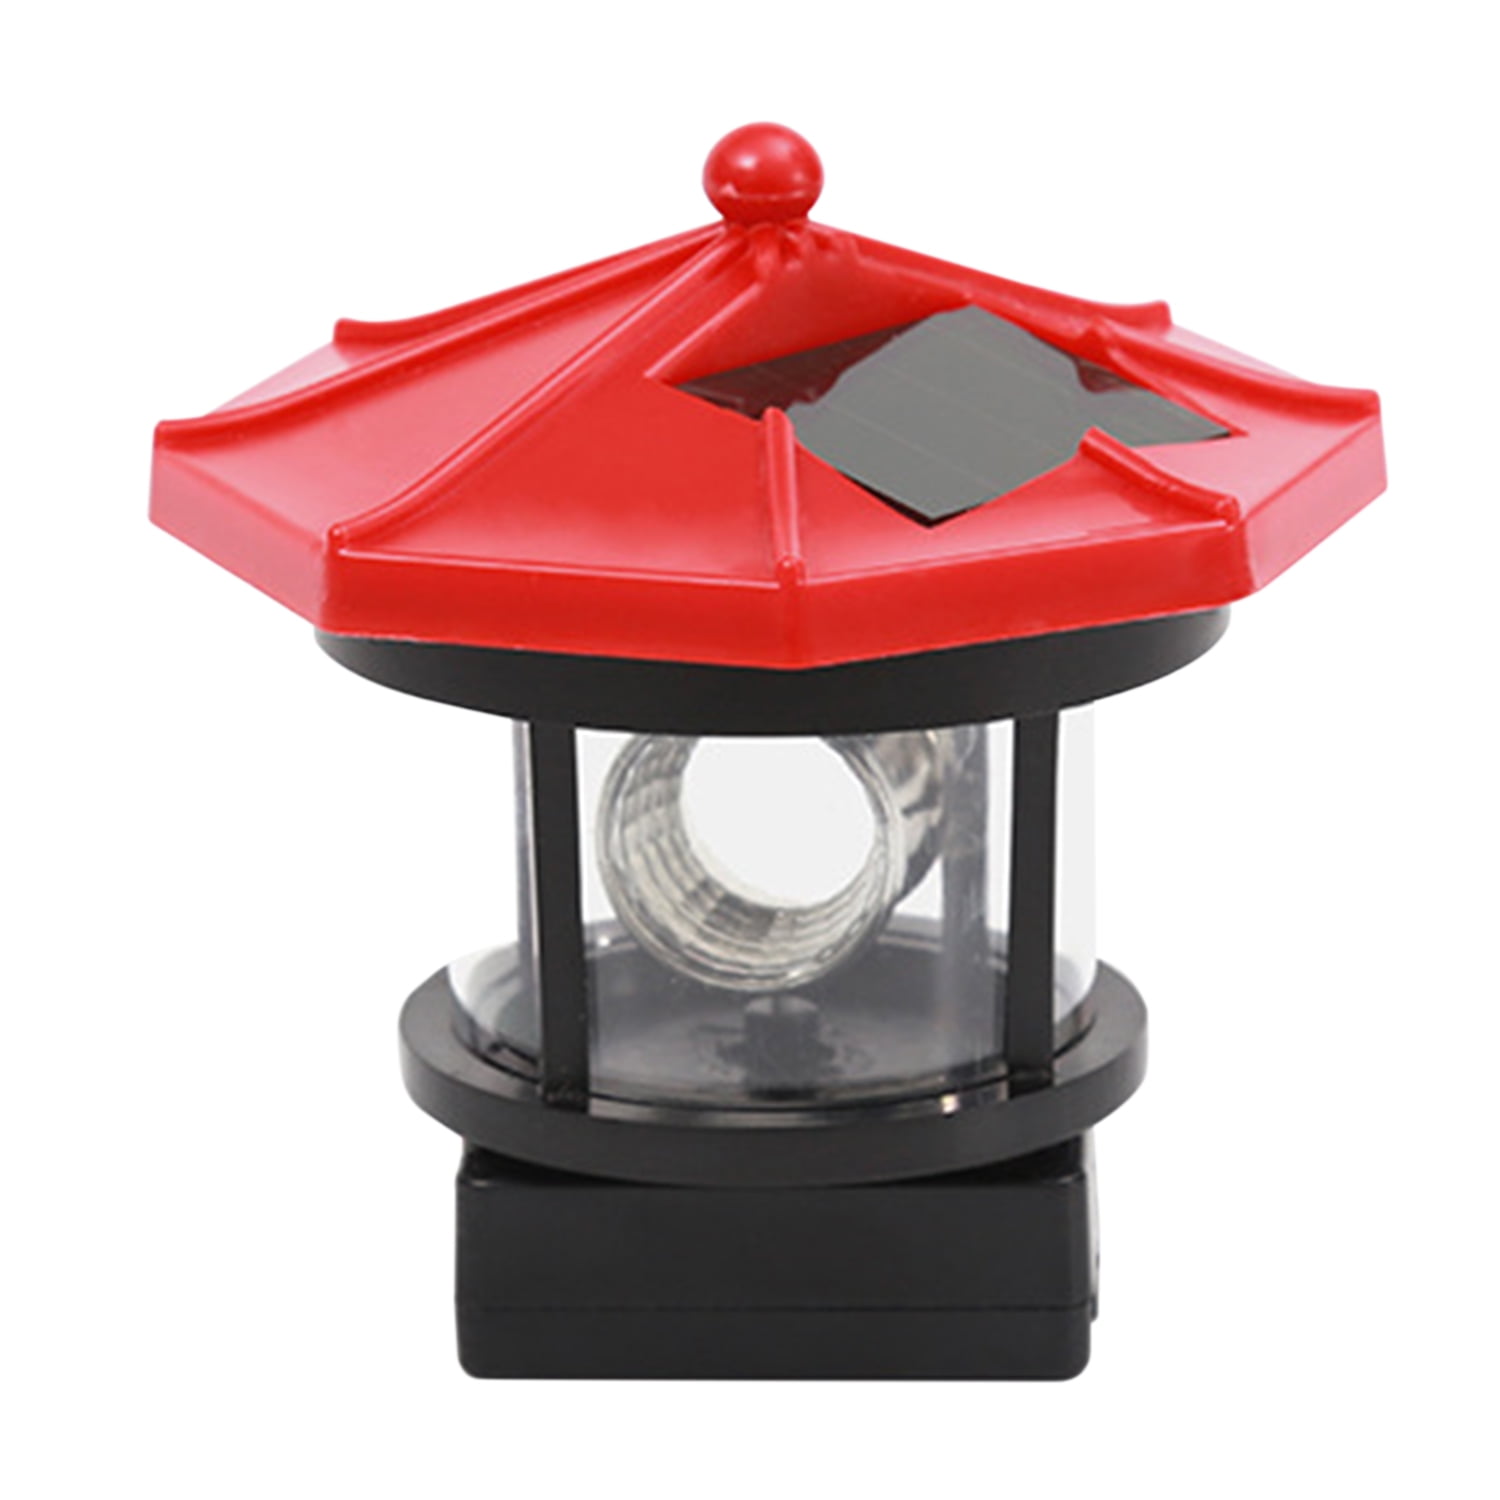 Lighthouse Solar LED Light Yard Garden Fence Outdoor Smart Sensor Rotating Lamp